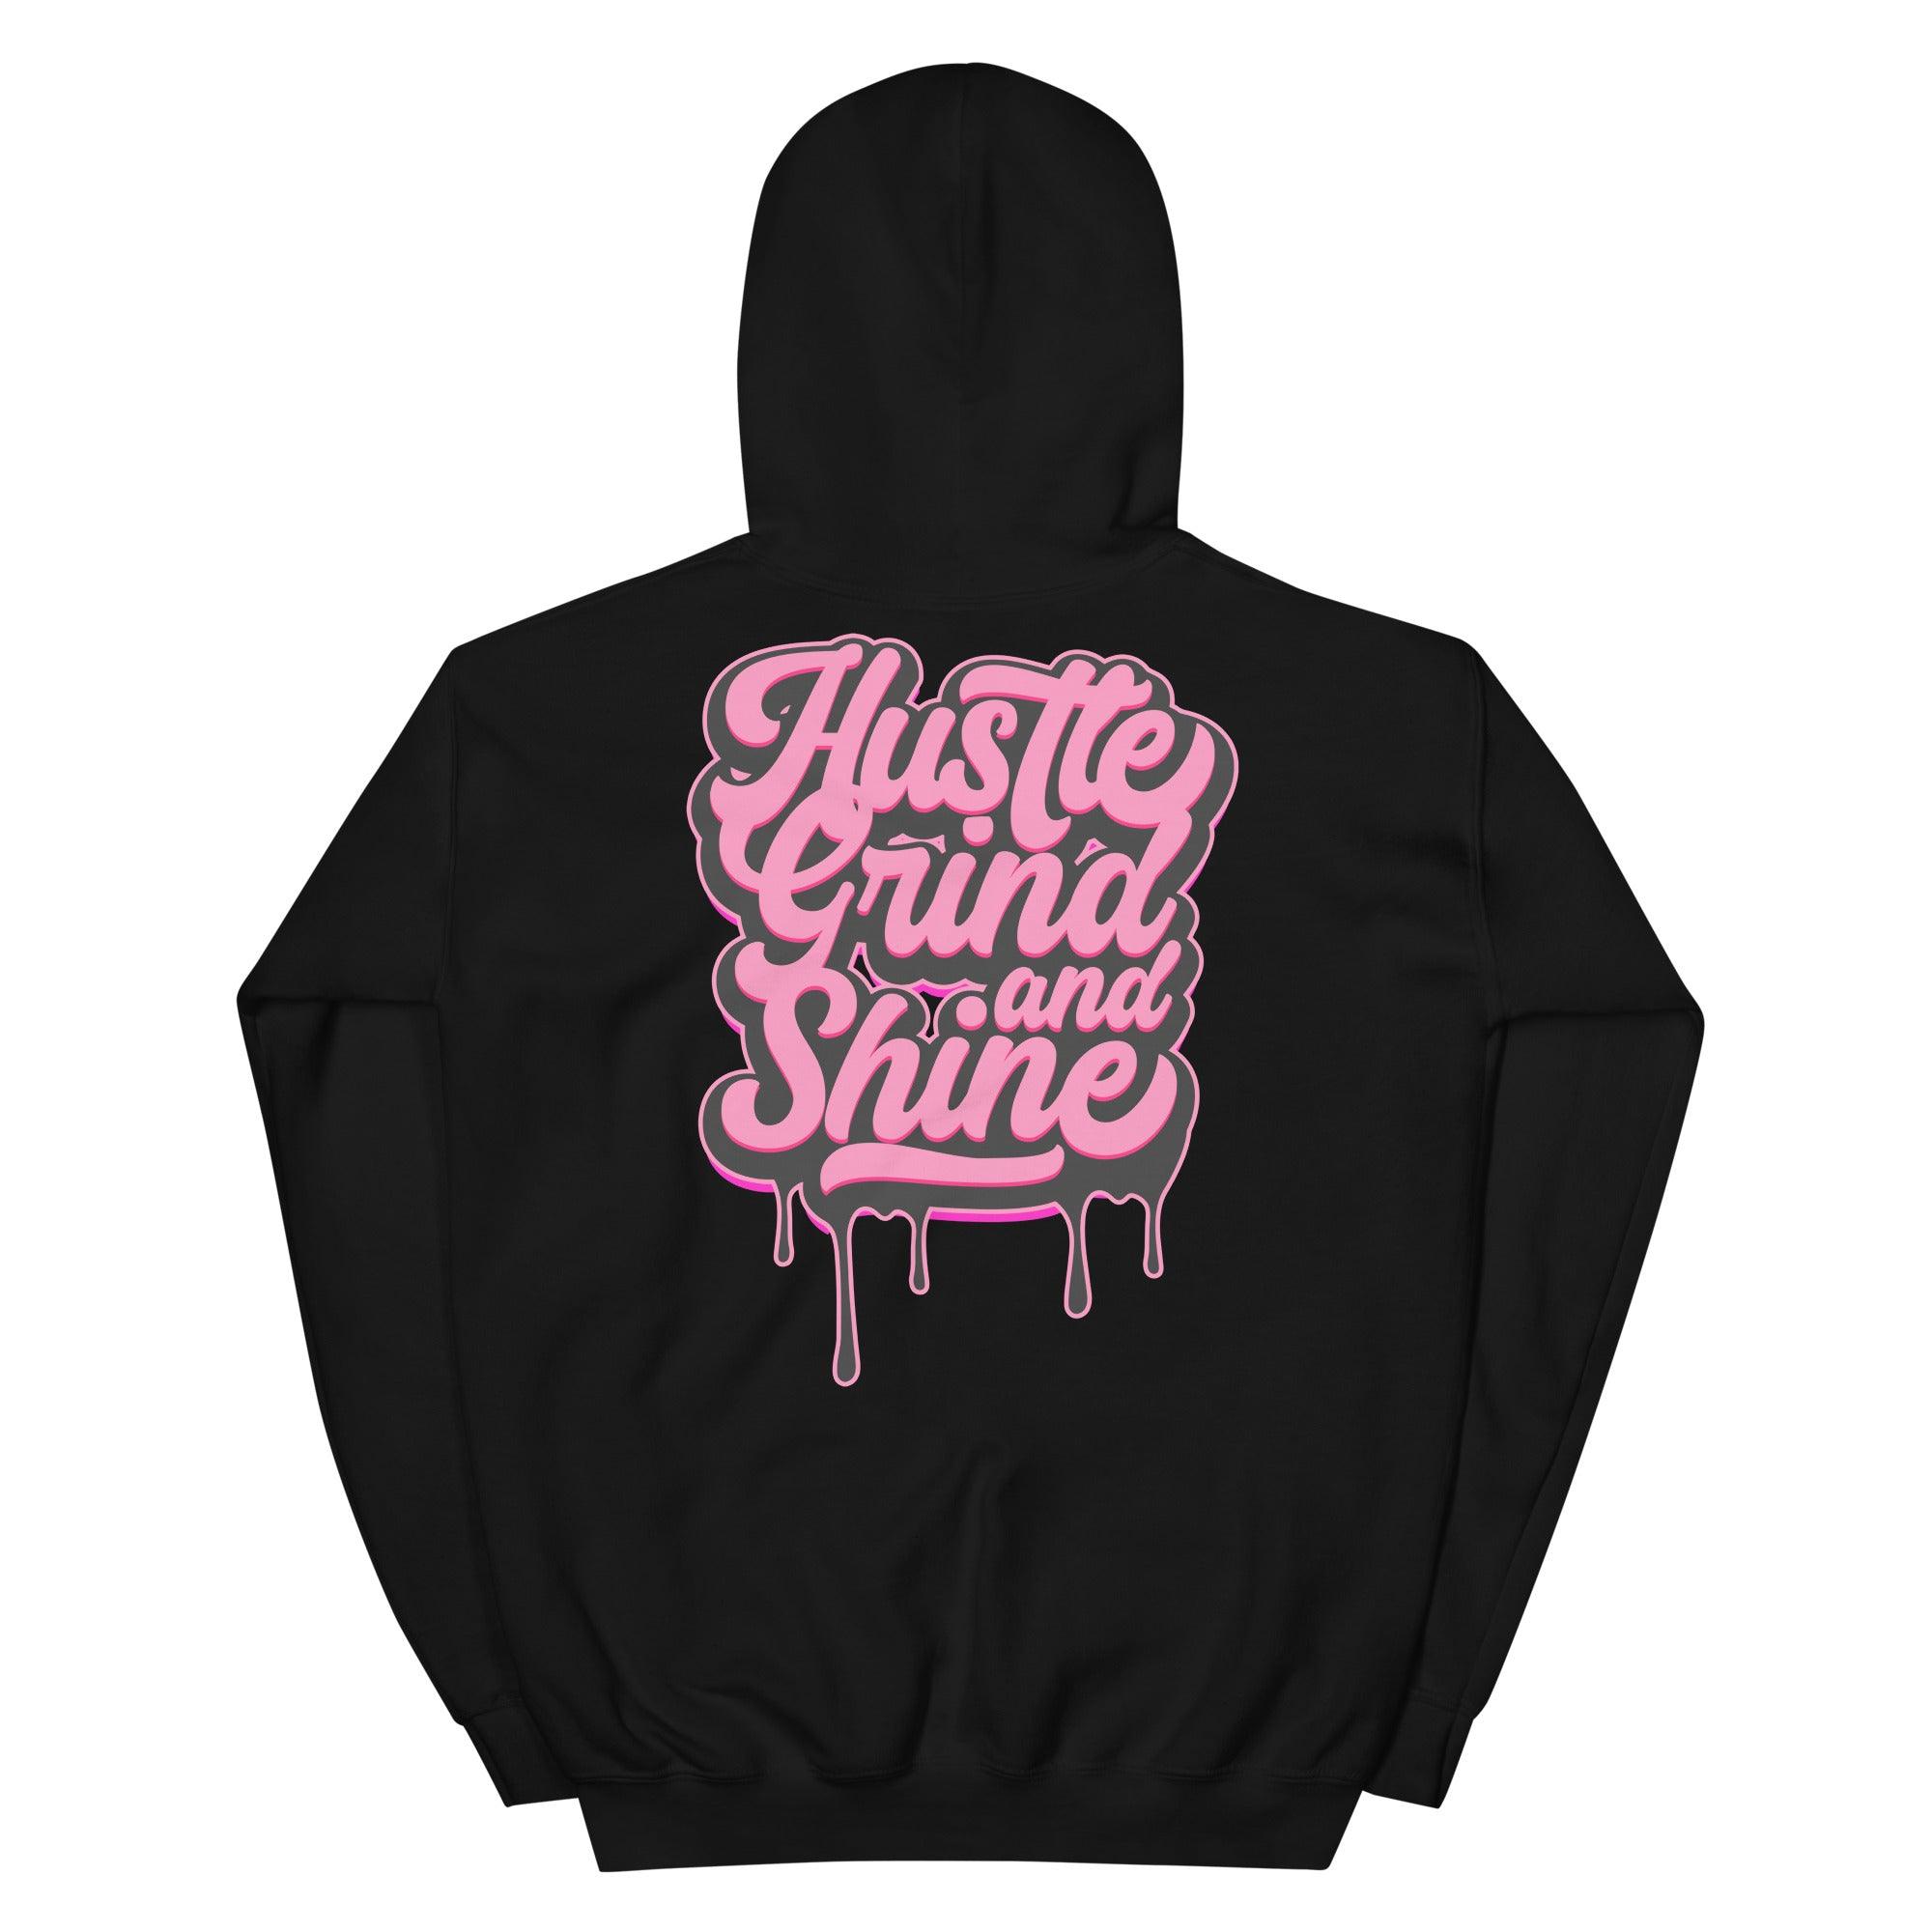 Hustle Grind and Shine Sweatshirt AJ 14 Low Shocking Pink photo